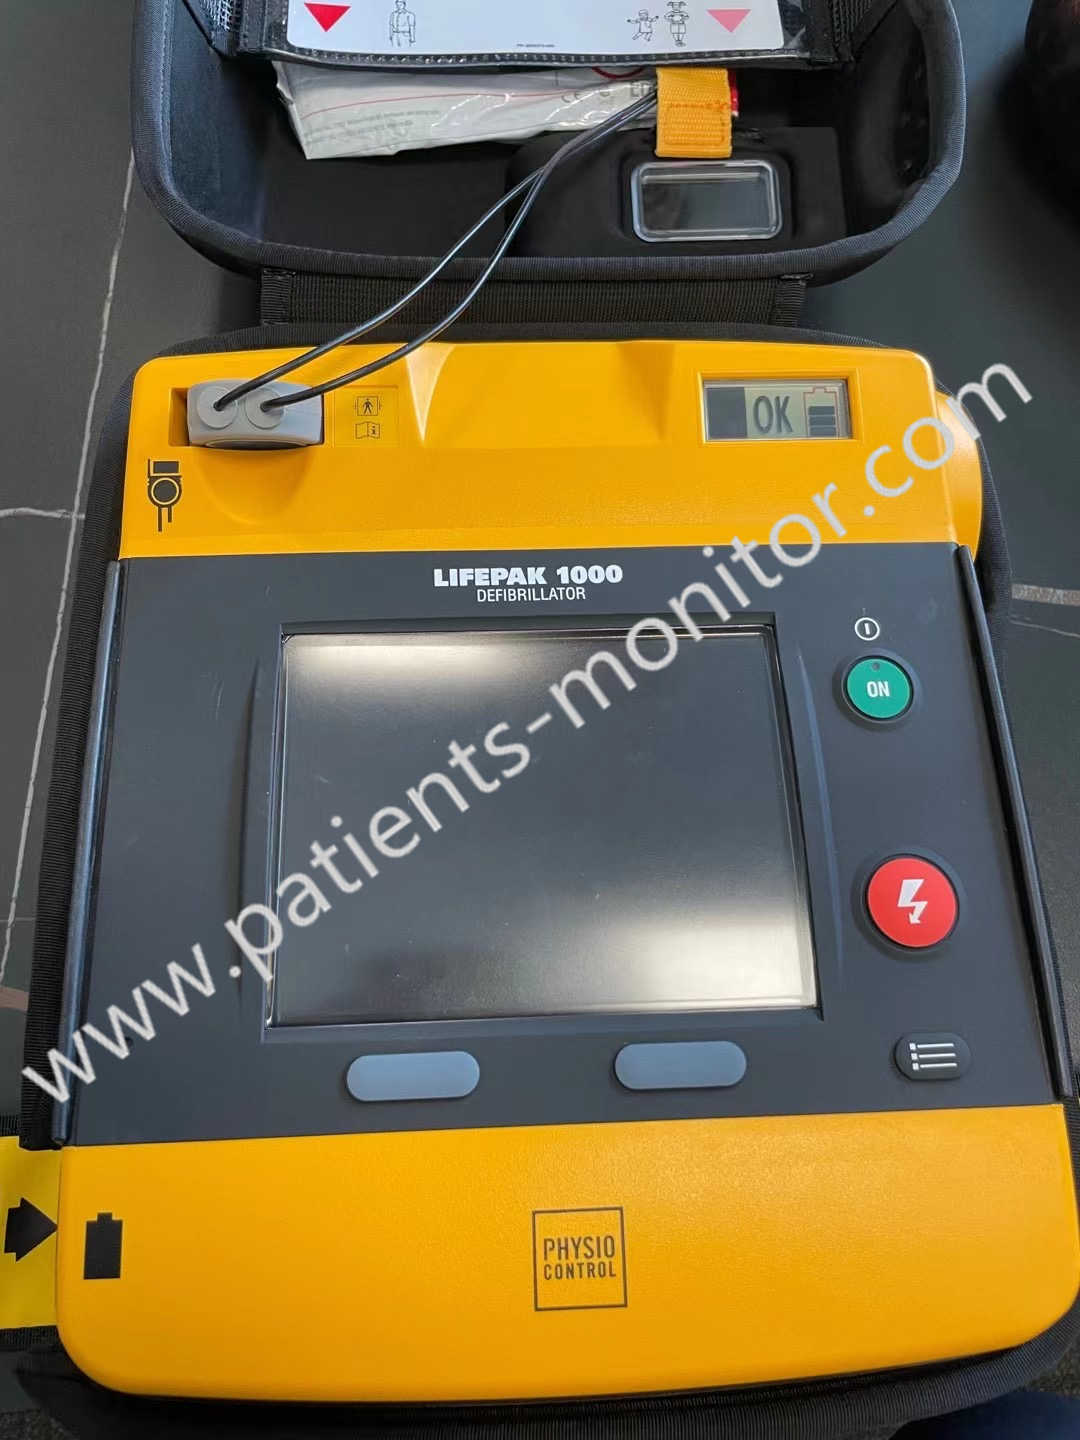 Medtronic LIFEPAK 1000 PHYSIO CONTROL defibrillator (2).jpg